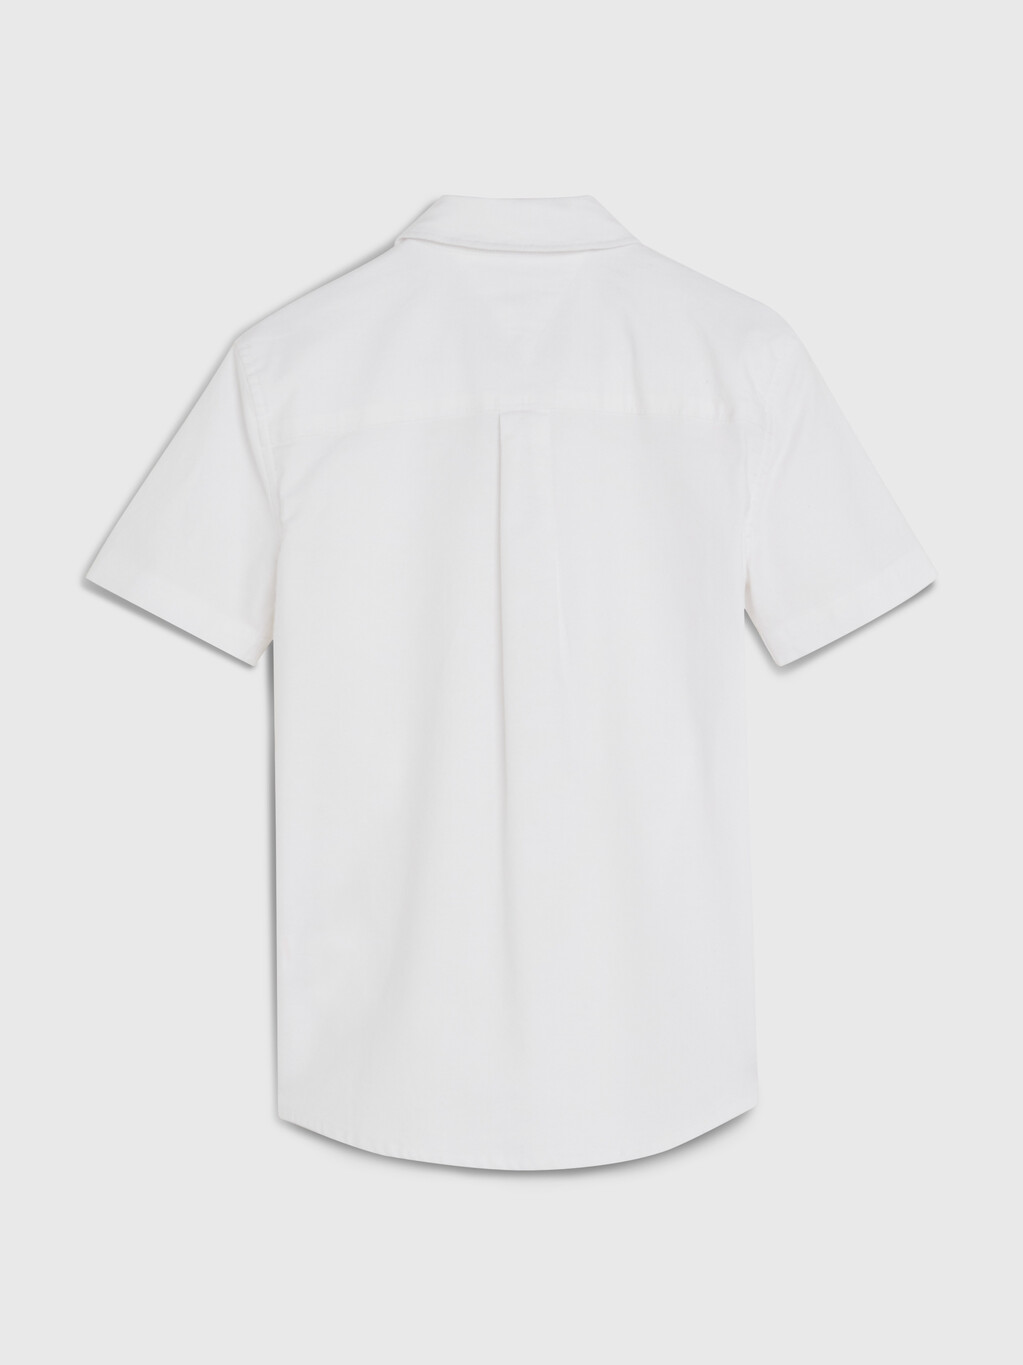 短袖牛津襯衫, White, hi-res